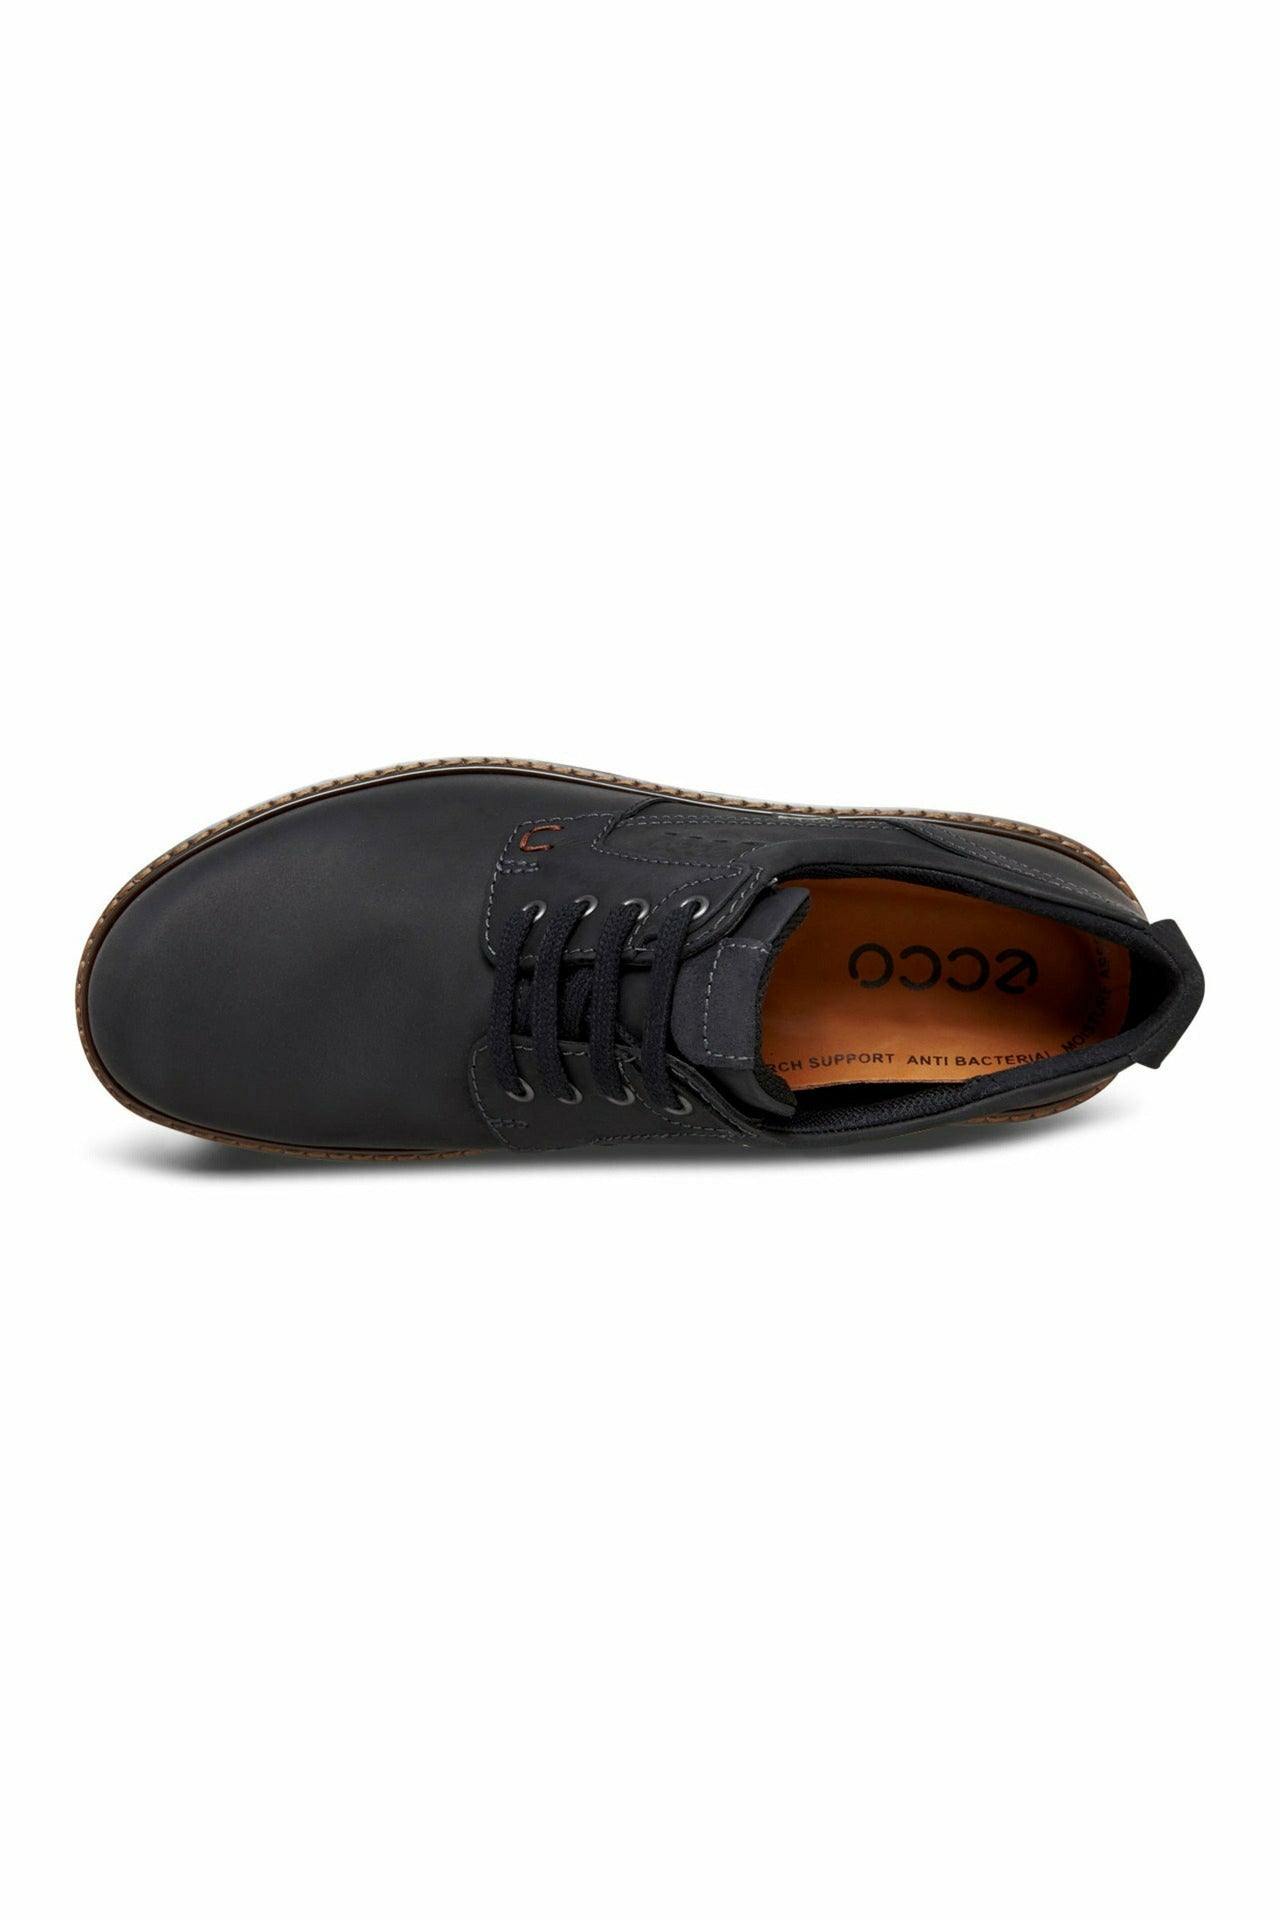 Ecco 510174 51052 Black - Meeks Shoes